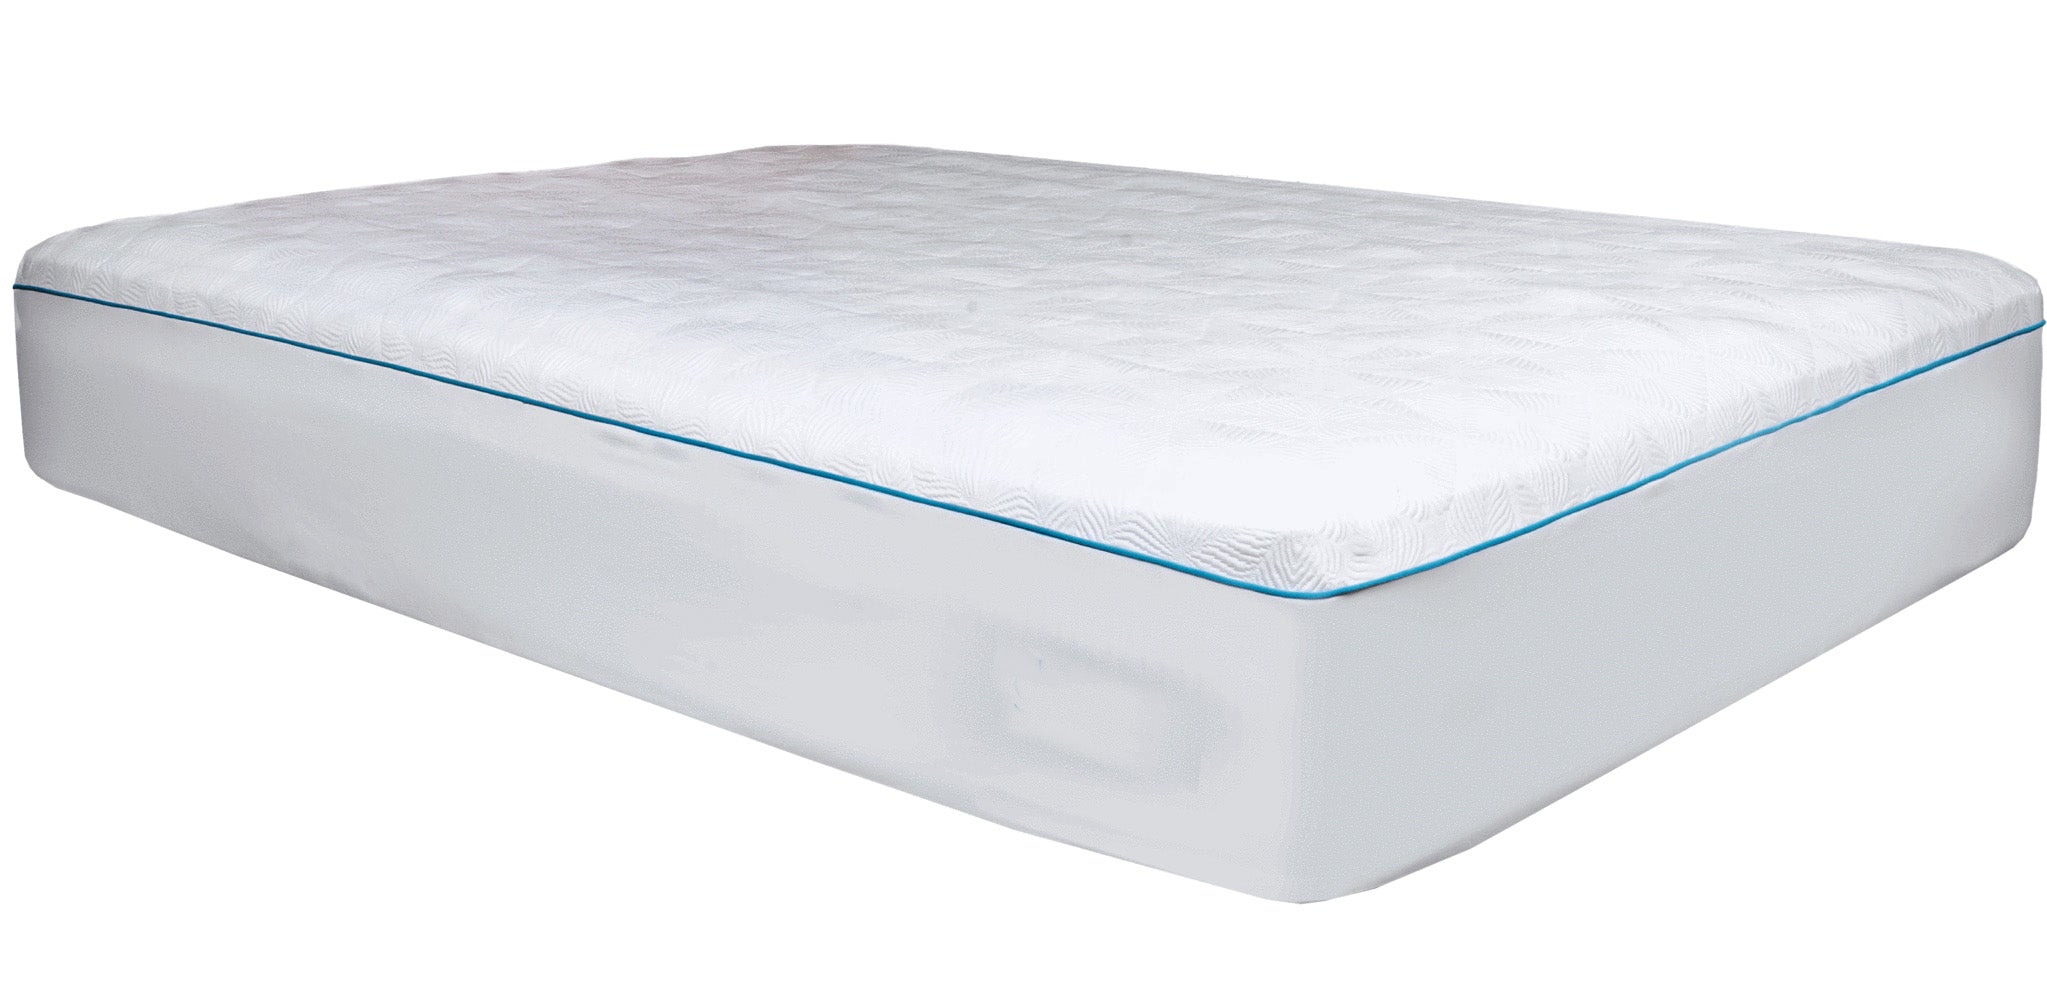 masterguard ice comfort mattress protector